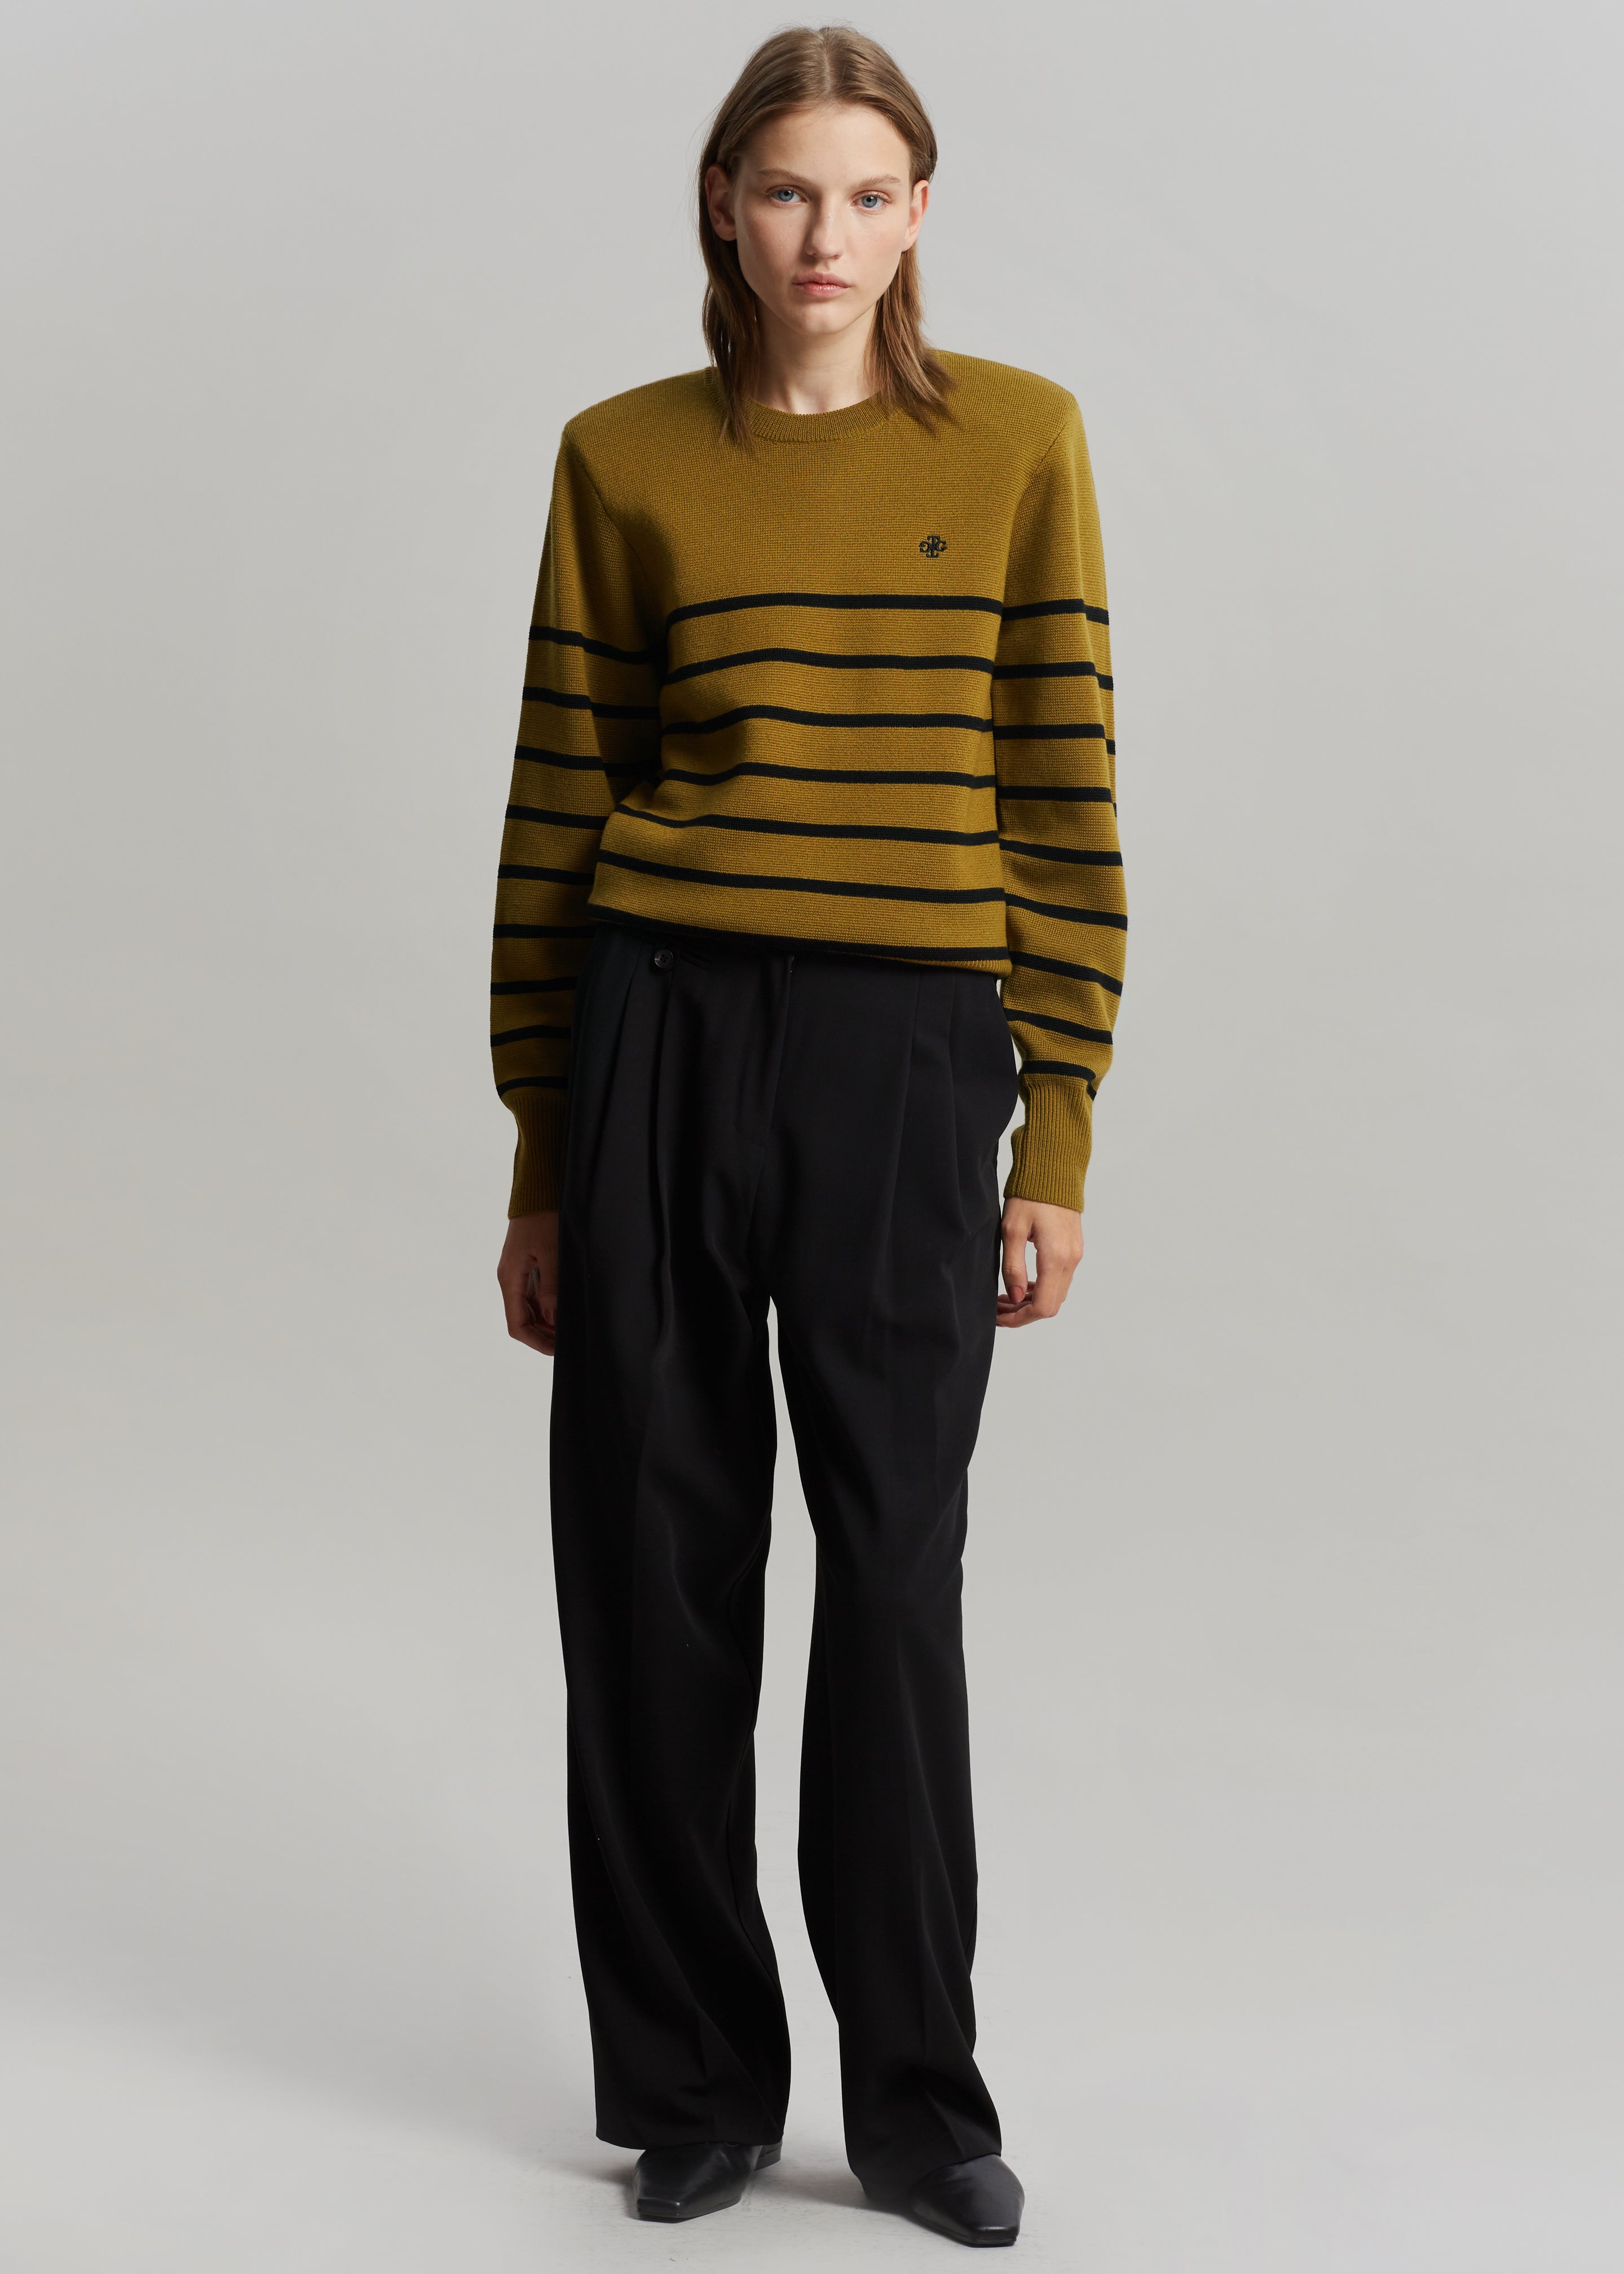 The Garment St Moritz Sweater - Mustard/Black Stripes - 5